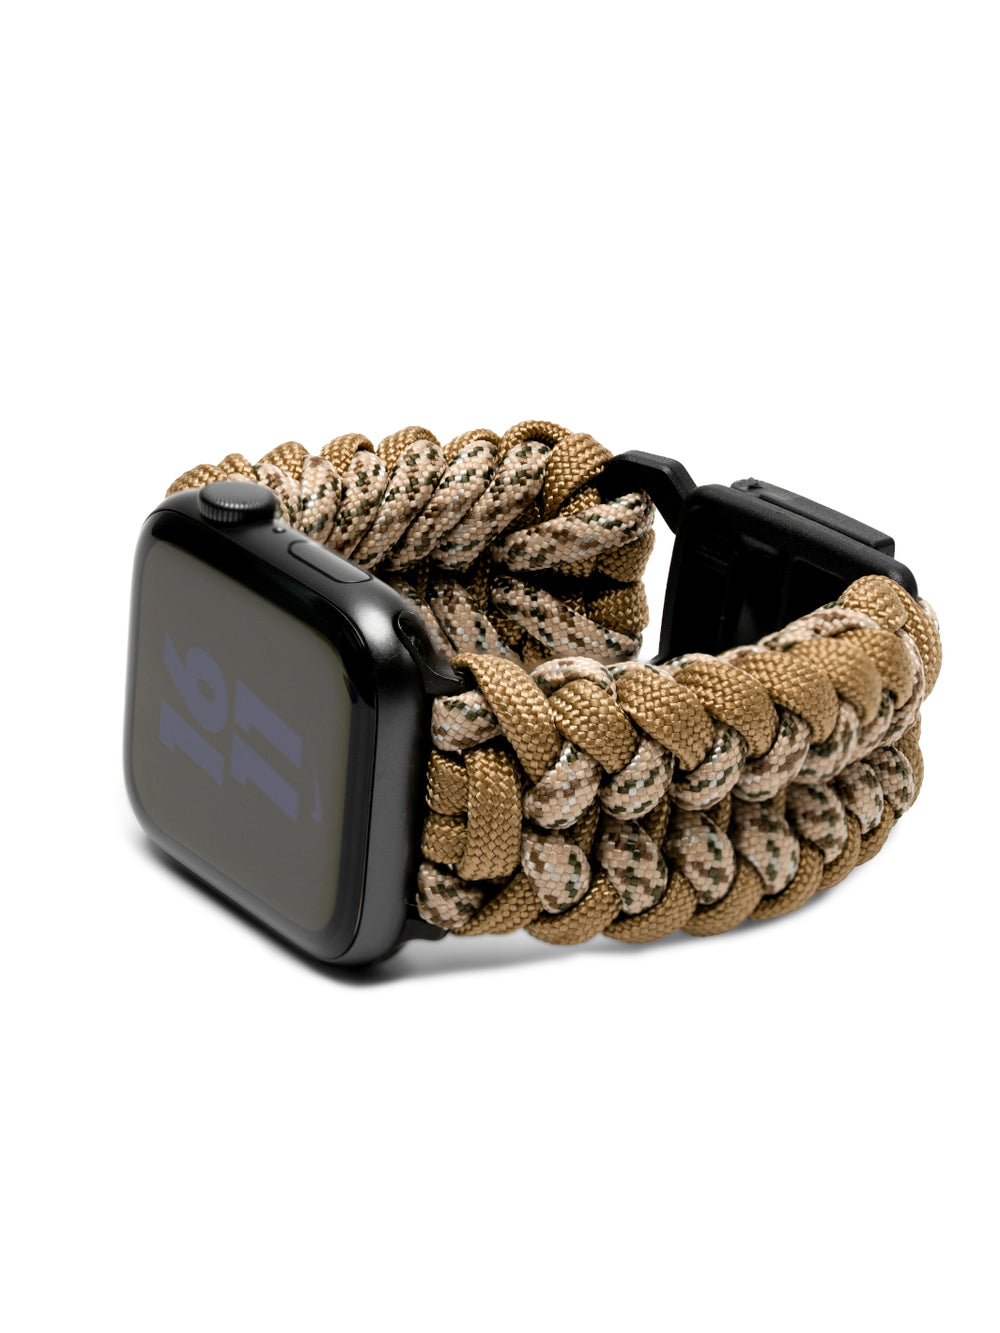 Strapcord Ribs Apple Watch Strap Article 006 Desert Camo 3 1065 x 1420